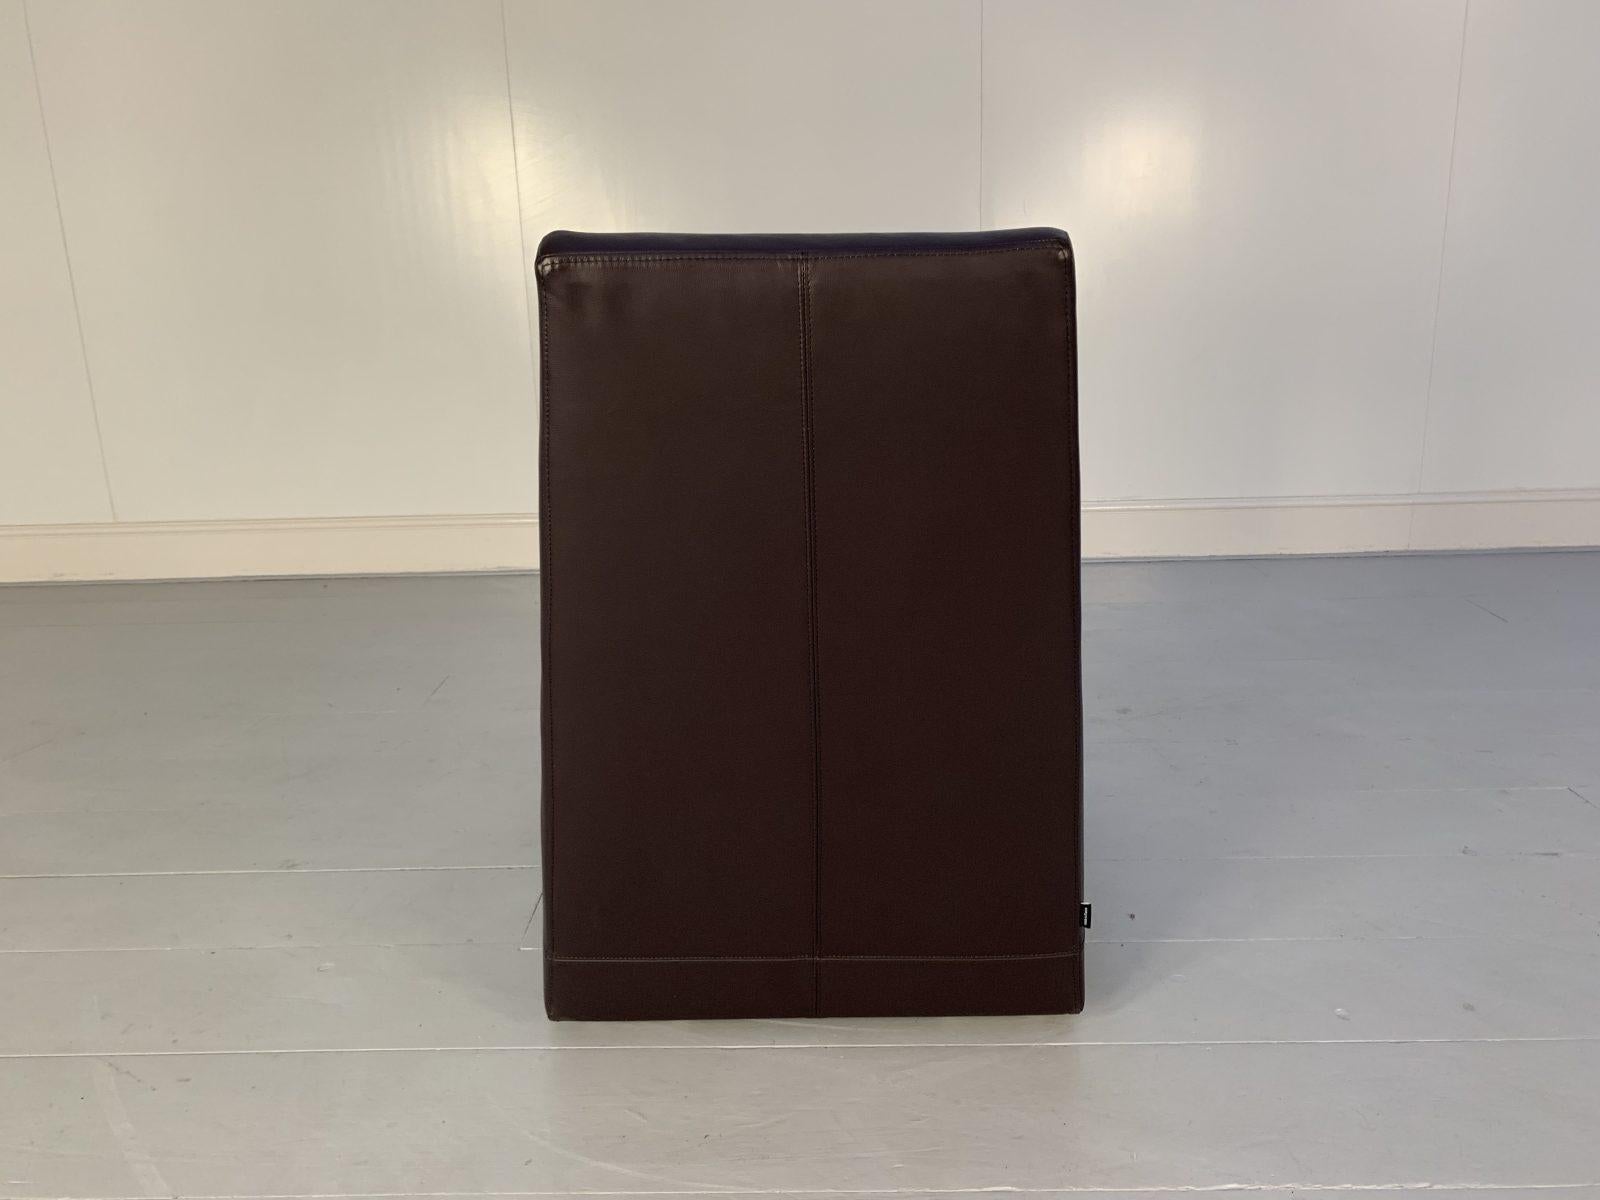 Contemporary Ligne Roset “Jul” Armchair, in Aubergine Purple Leather